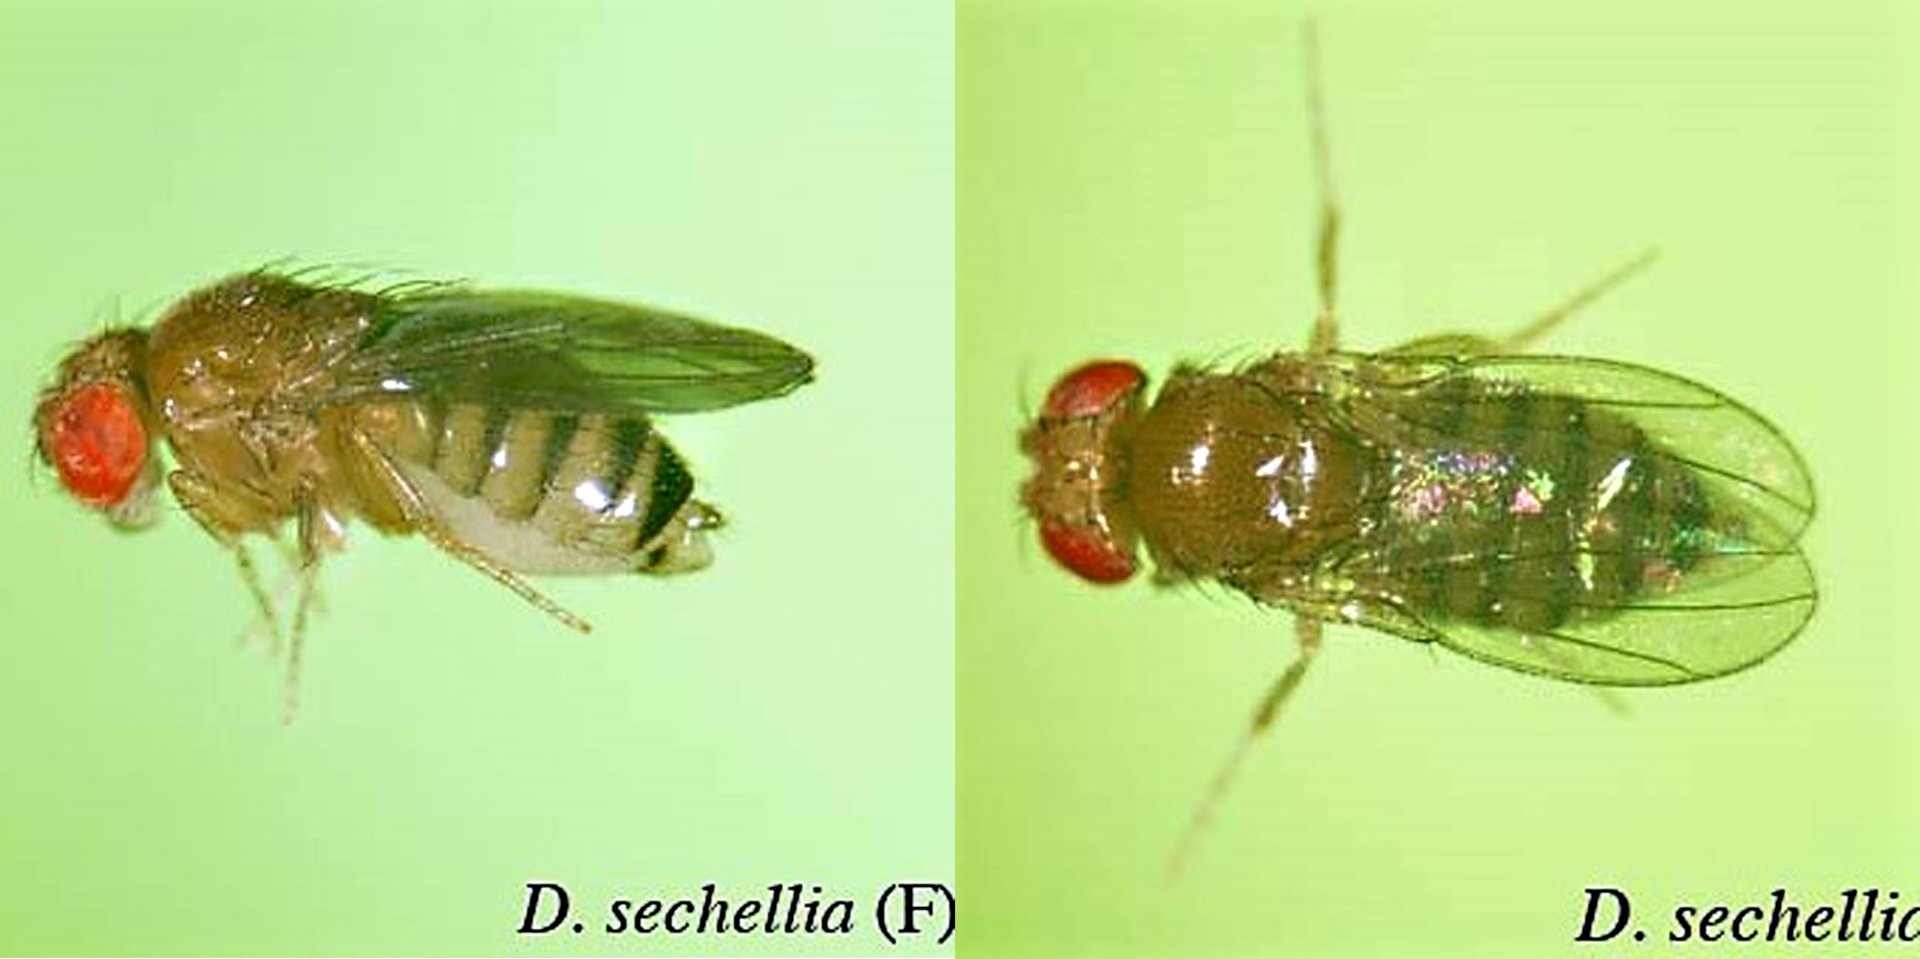 Obr. 3 Samička Drosophila sechellia. Převzato z: https://kyotofly.kit.jp/ehime/spdescription/sechellia.html